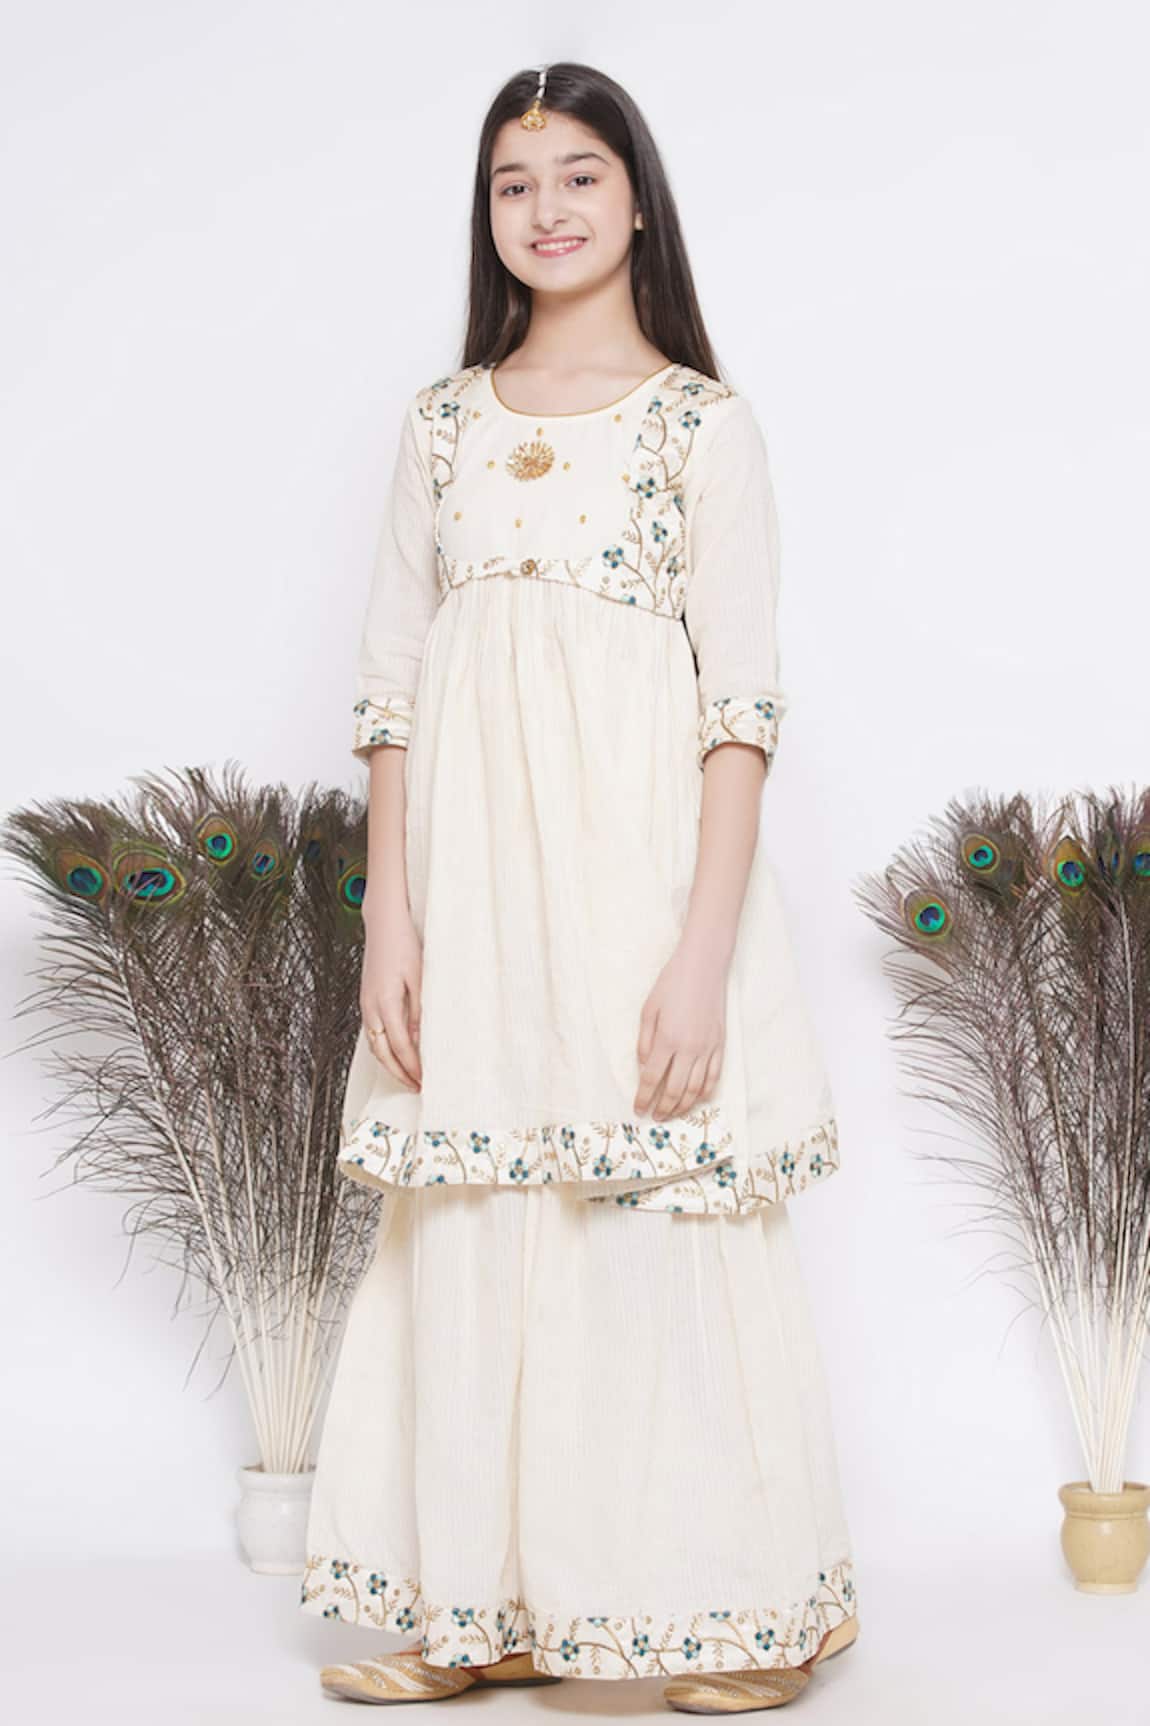 Buy Latest Design Sharara Suits  Sharara Dress Online  Mirraw